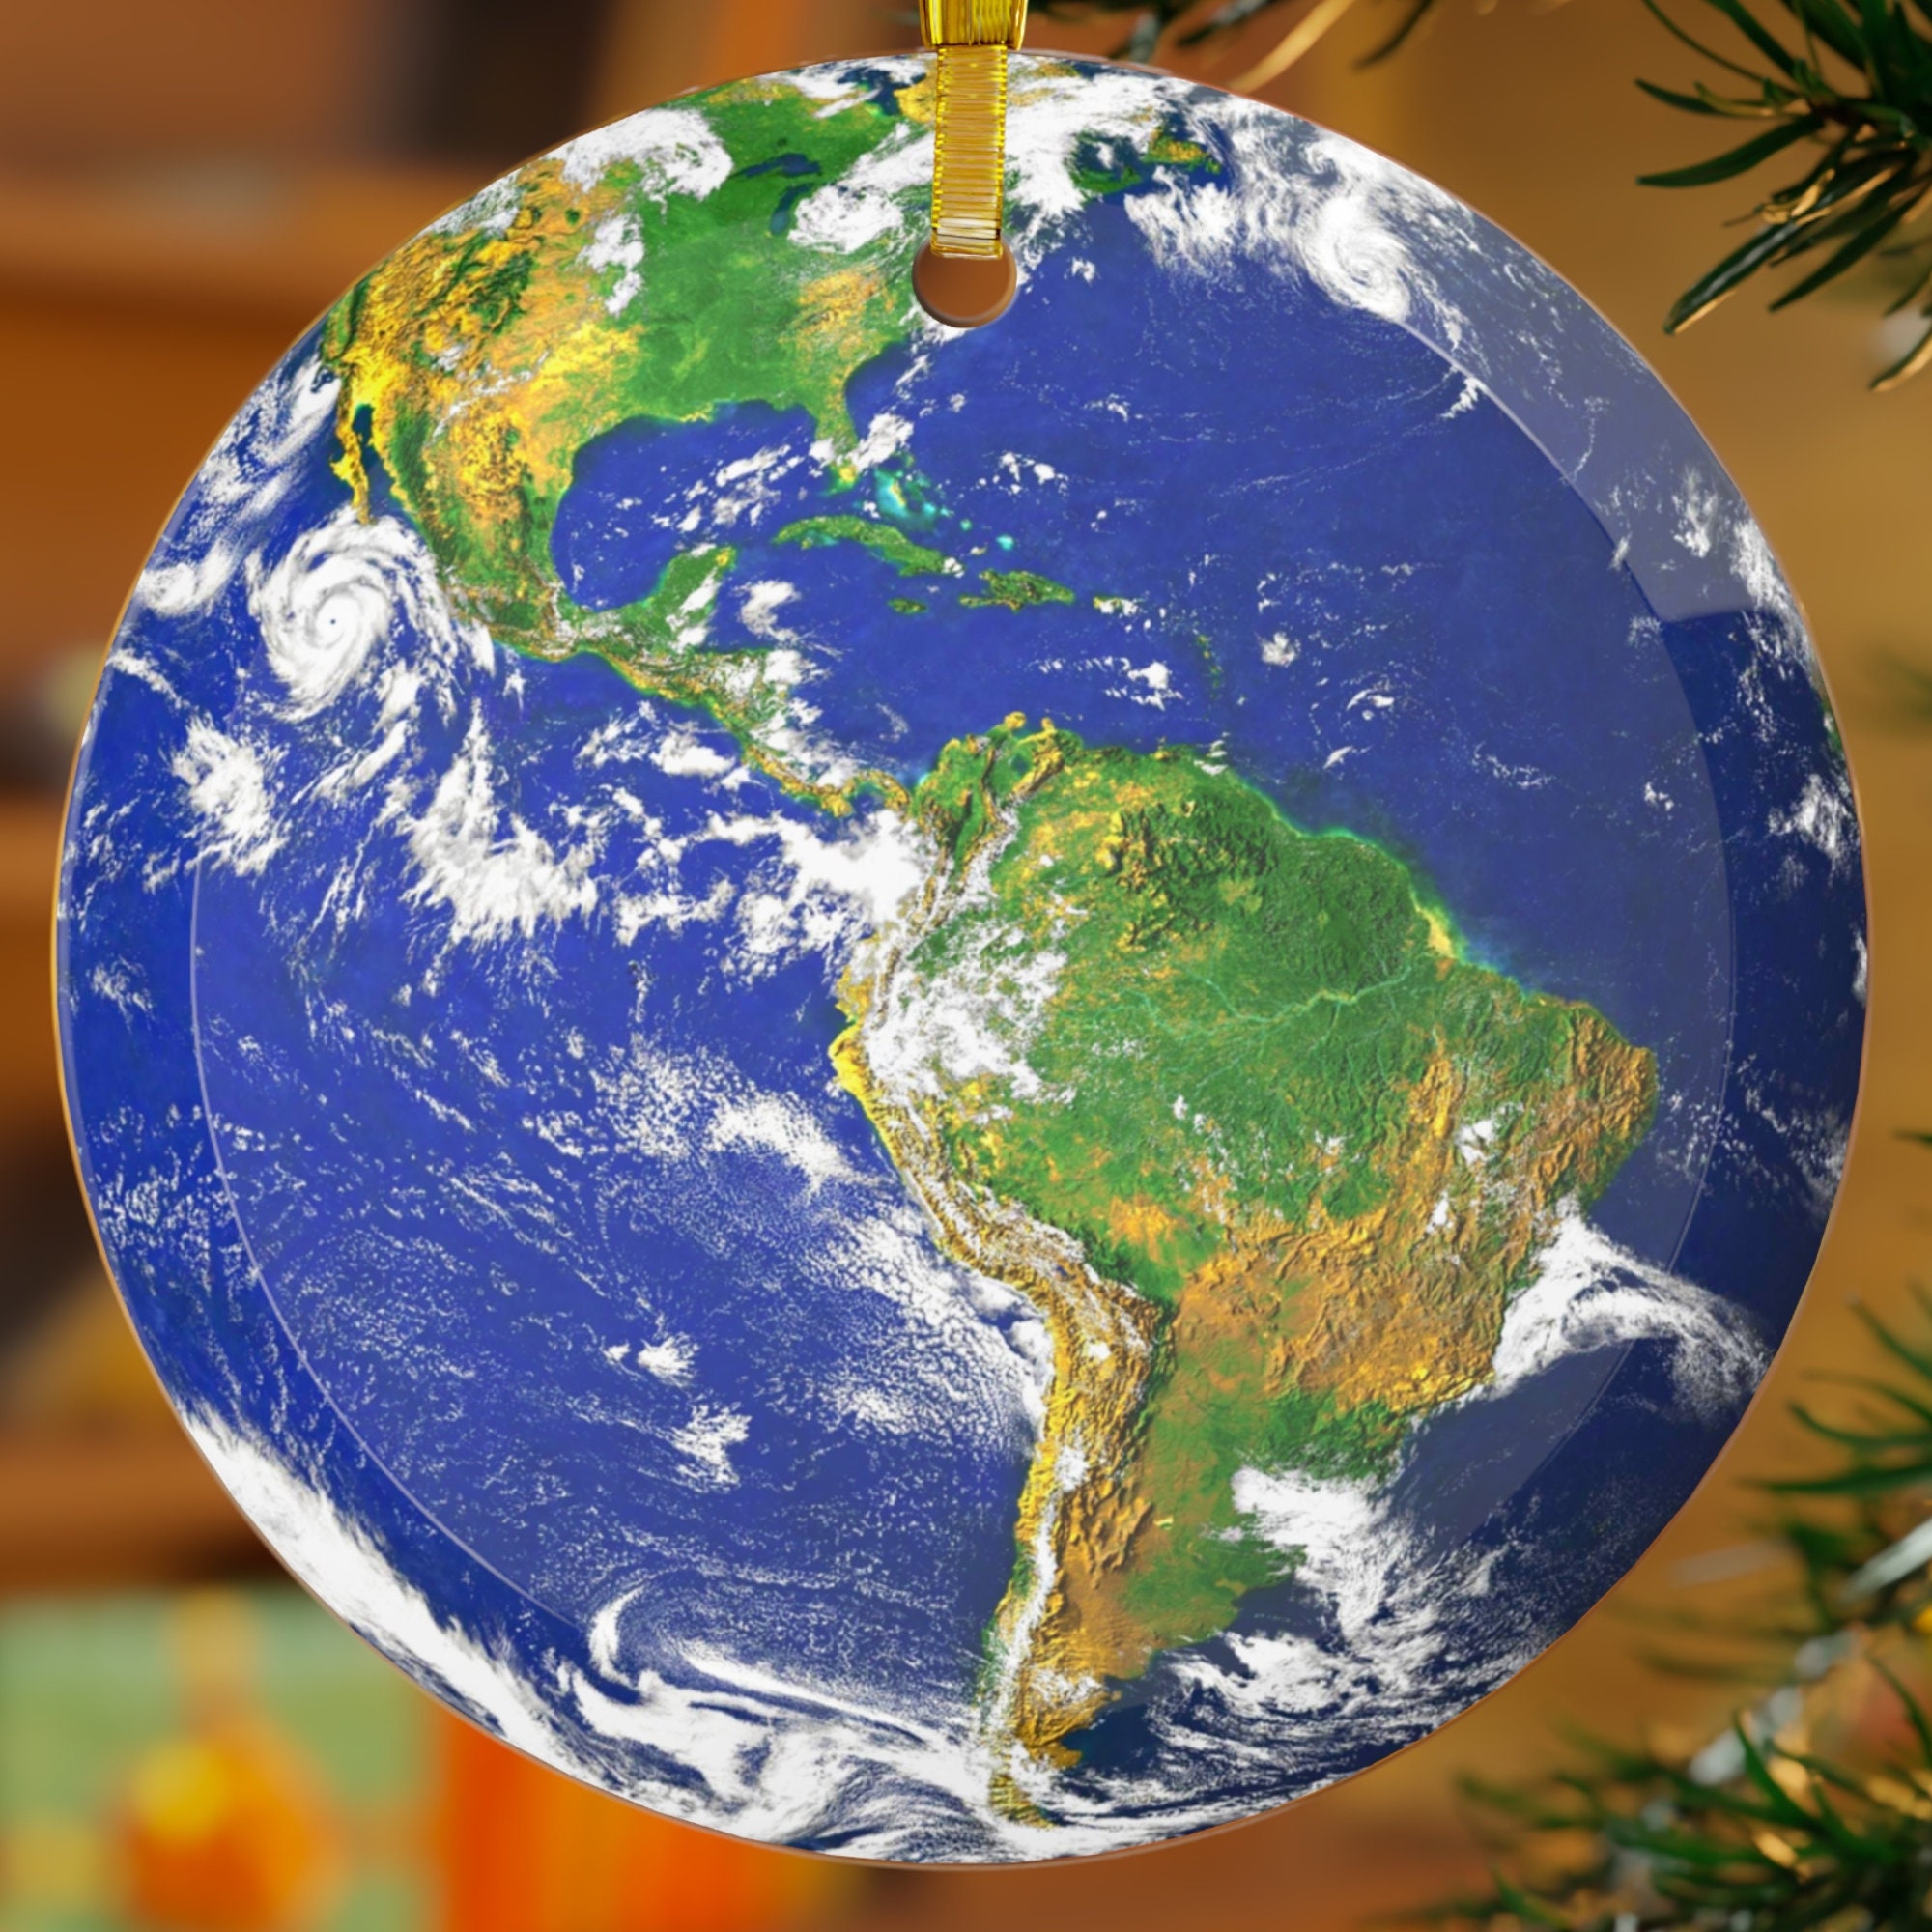 Mini Planet Earth Ornament – Old World Christmas